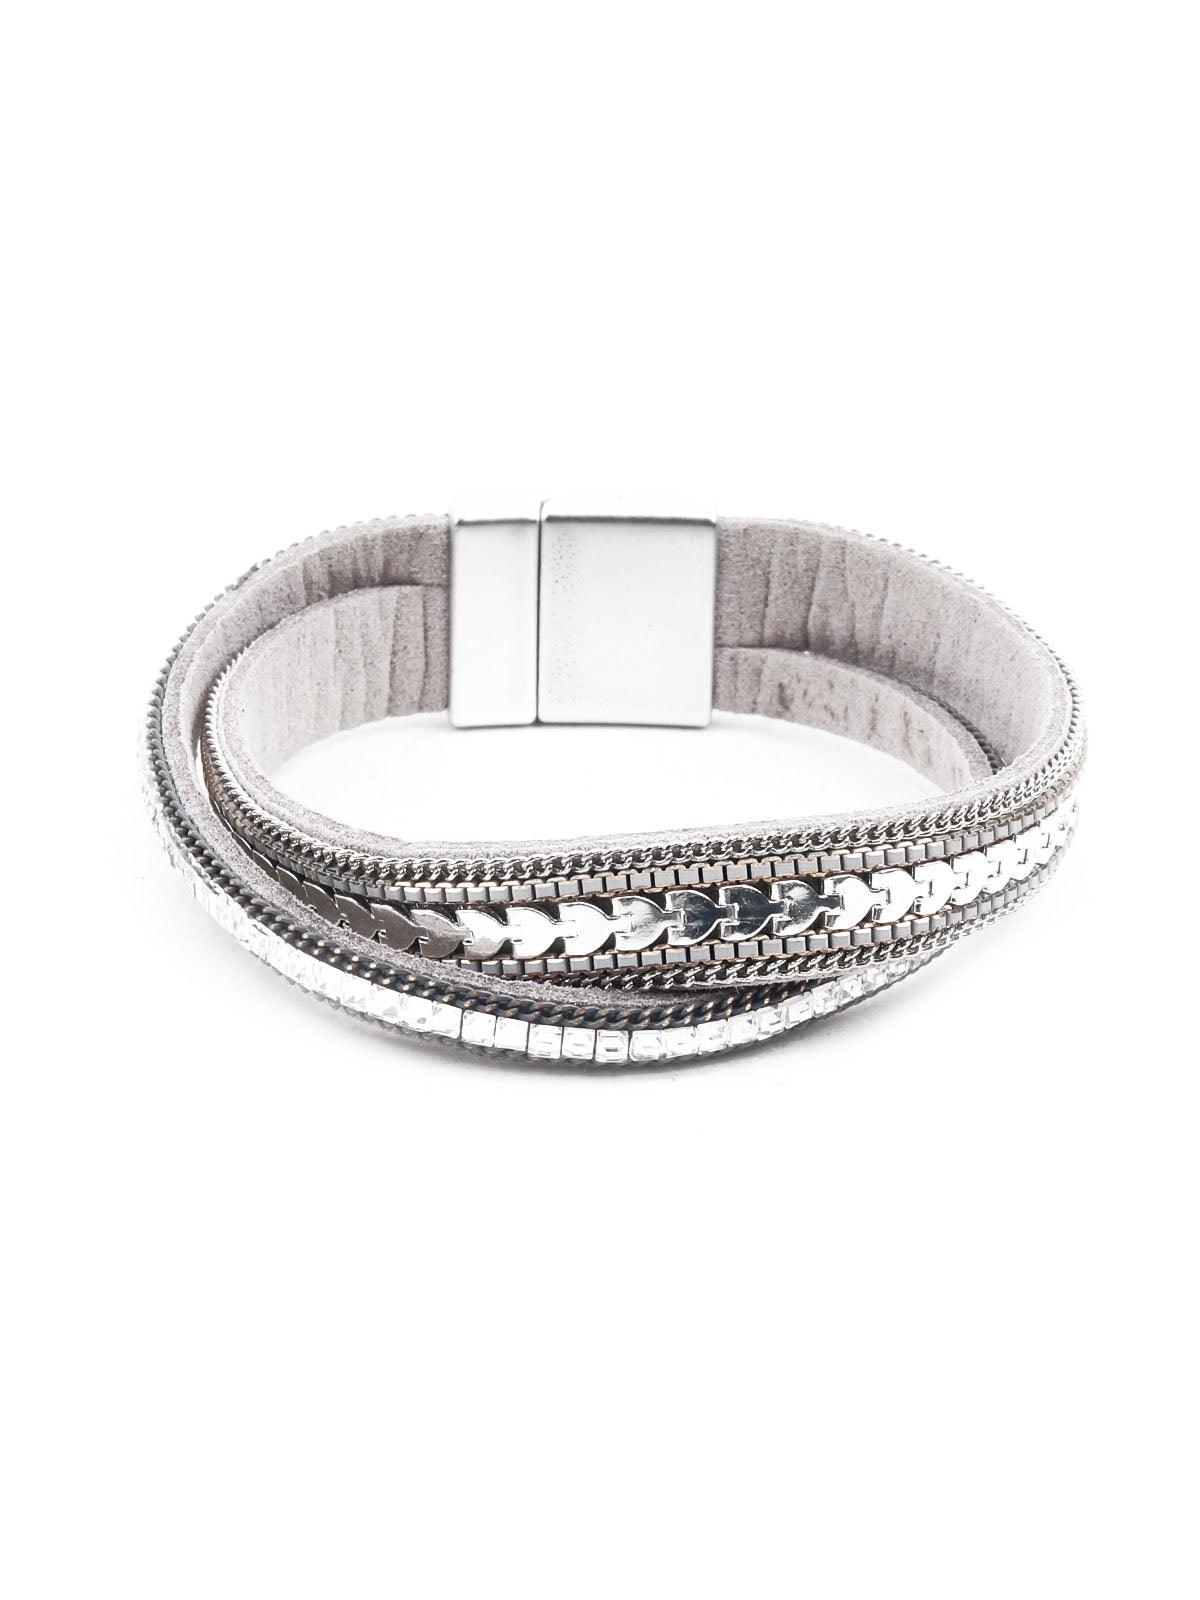 Women's Silver Color Bracelet - Odette